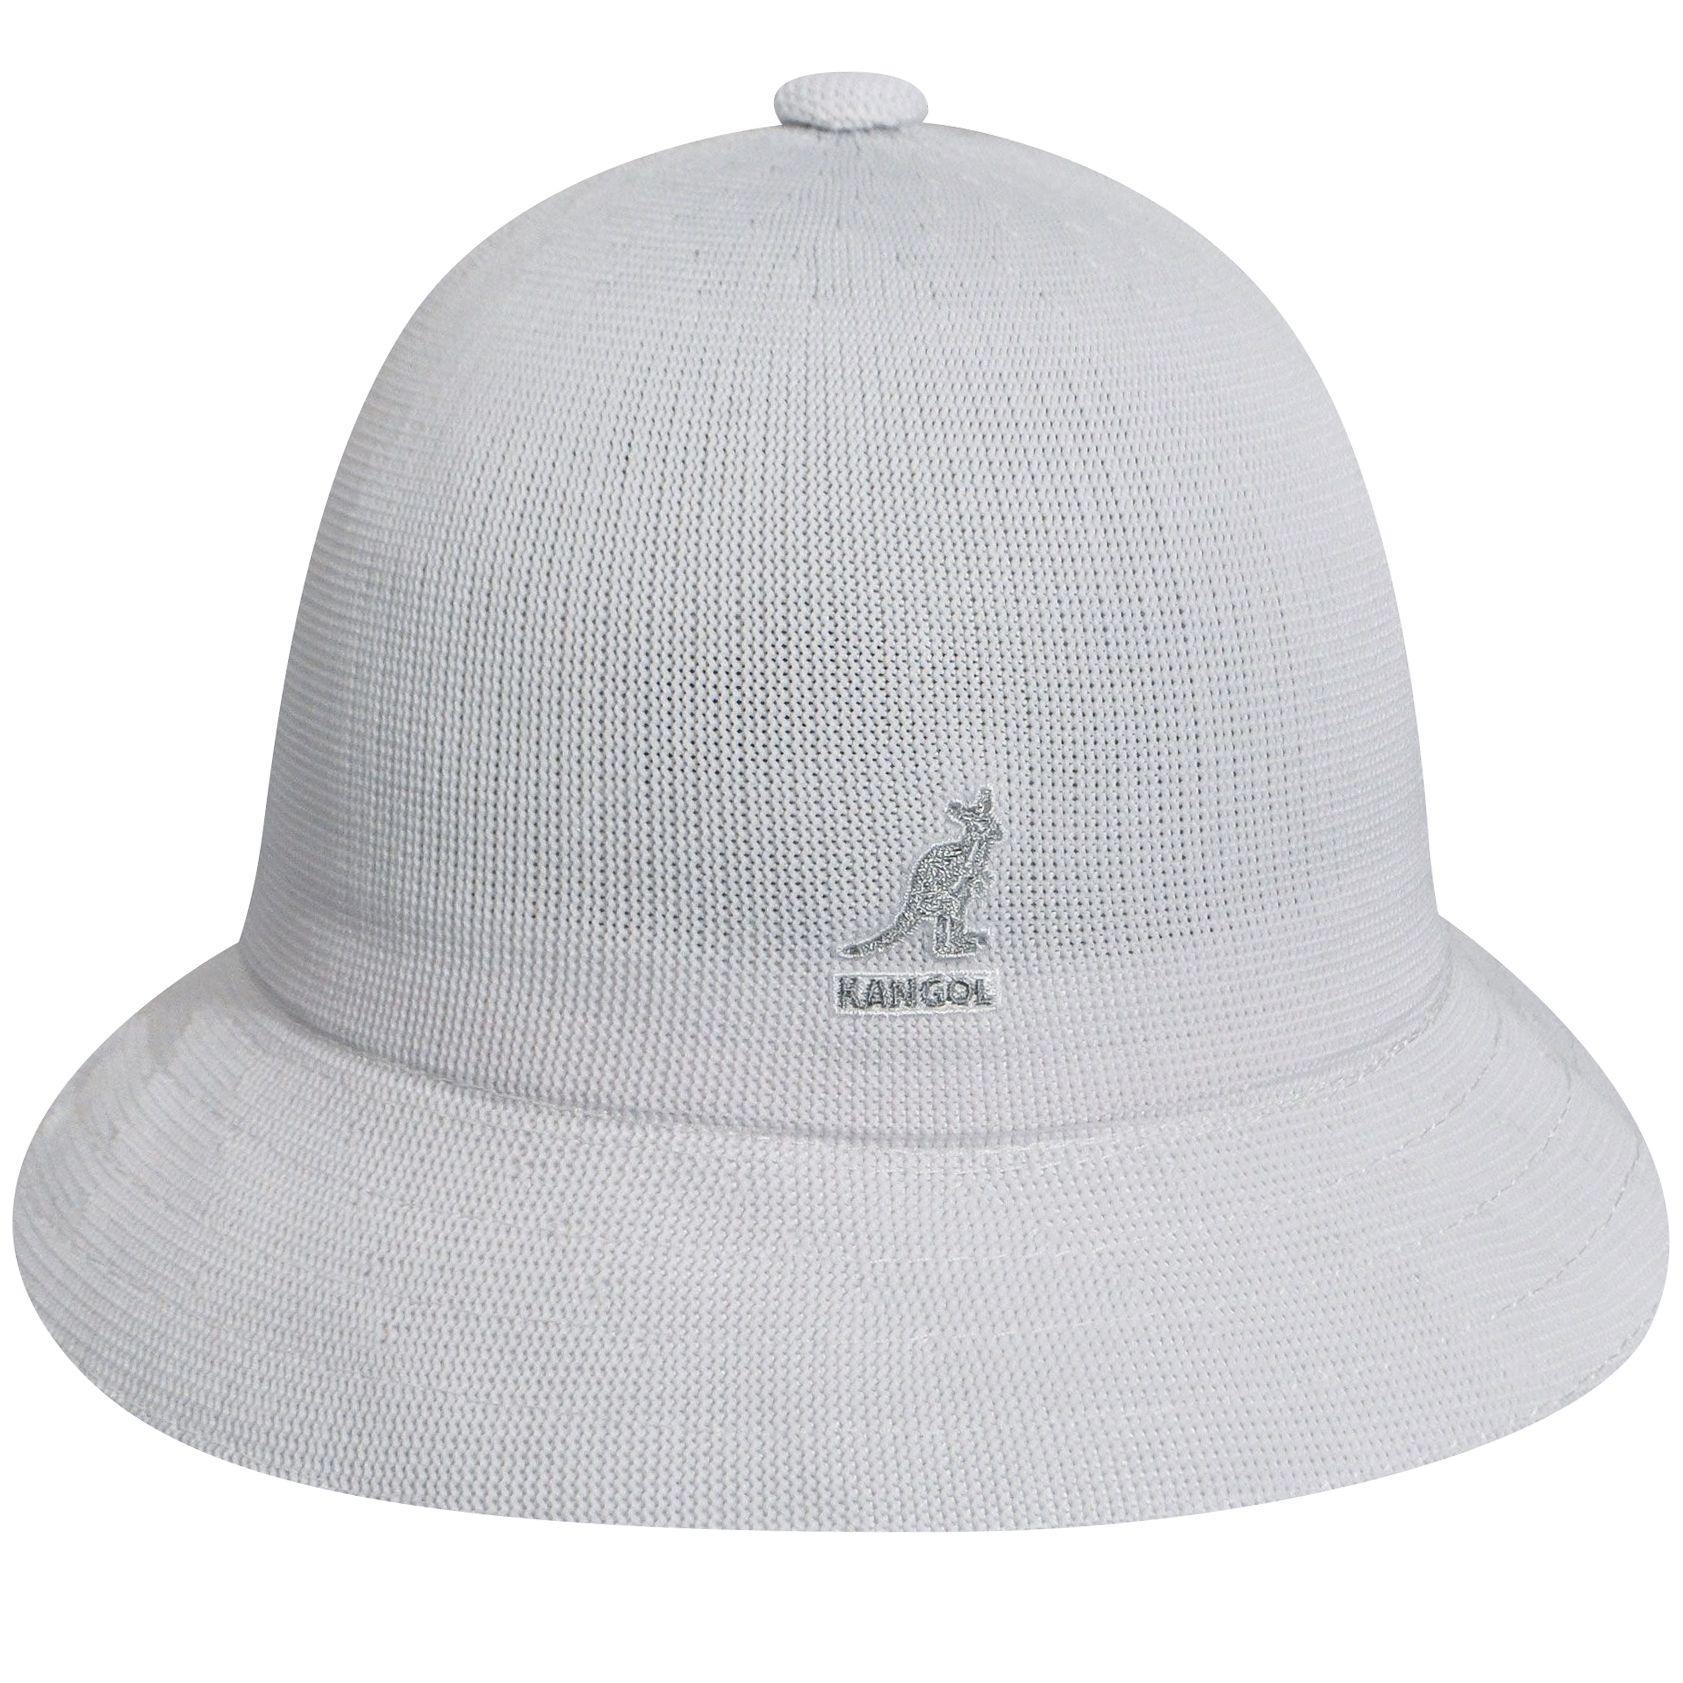 Kangol White Tropic Casual Bucket Hat K2094st 54 90 Upscale